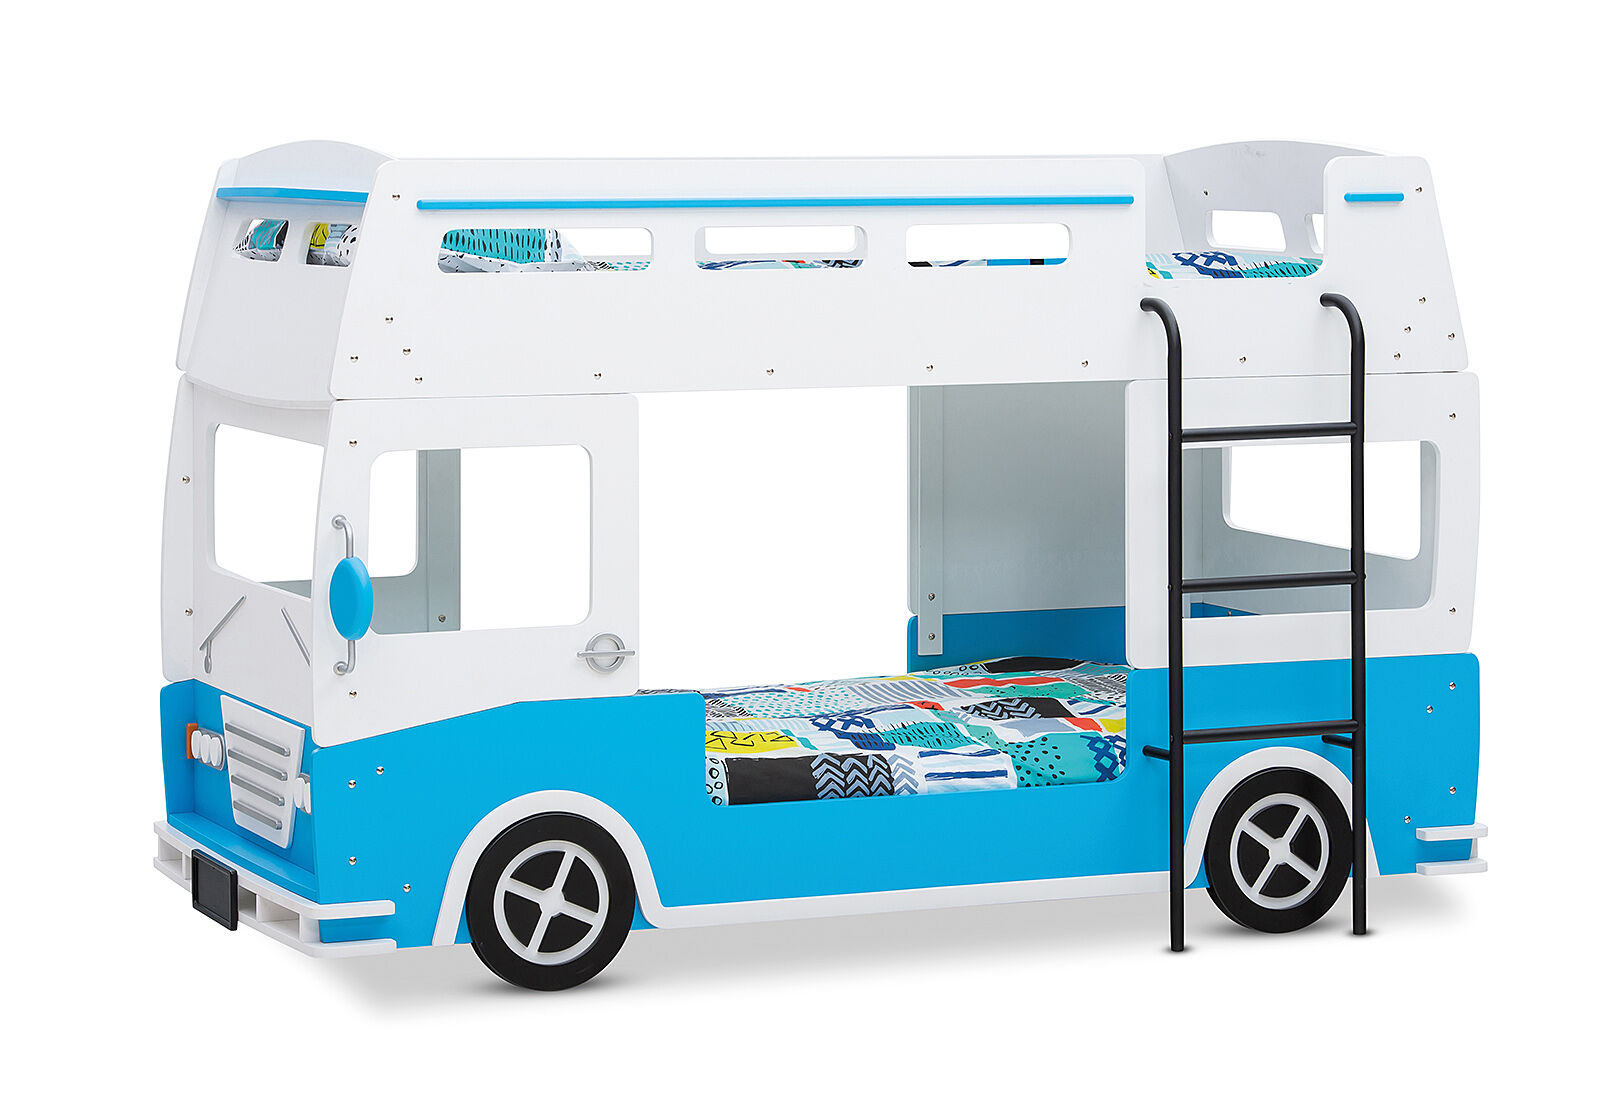 Kombie Mk2 Bunk Bed Amart Furniture, Tour Bus Bunk Beds